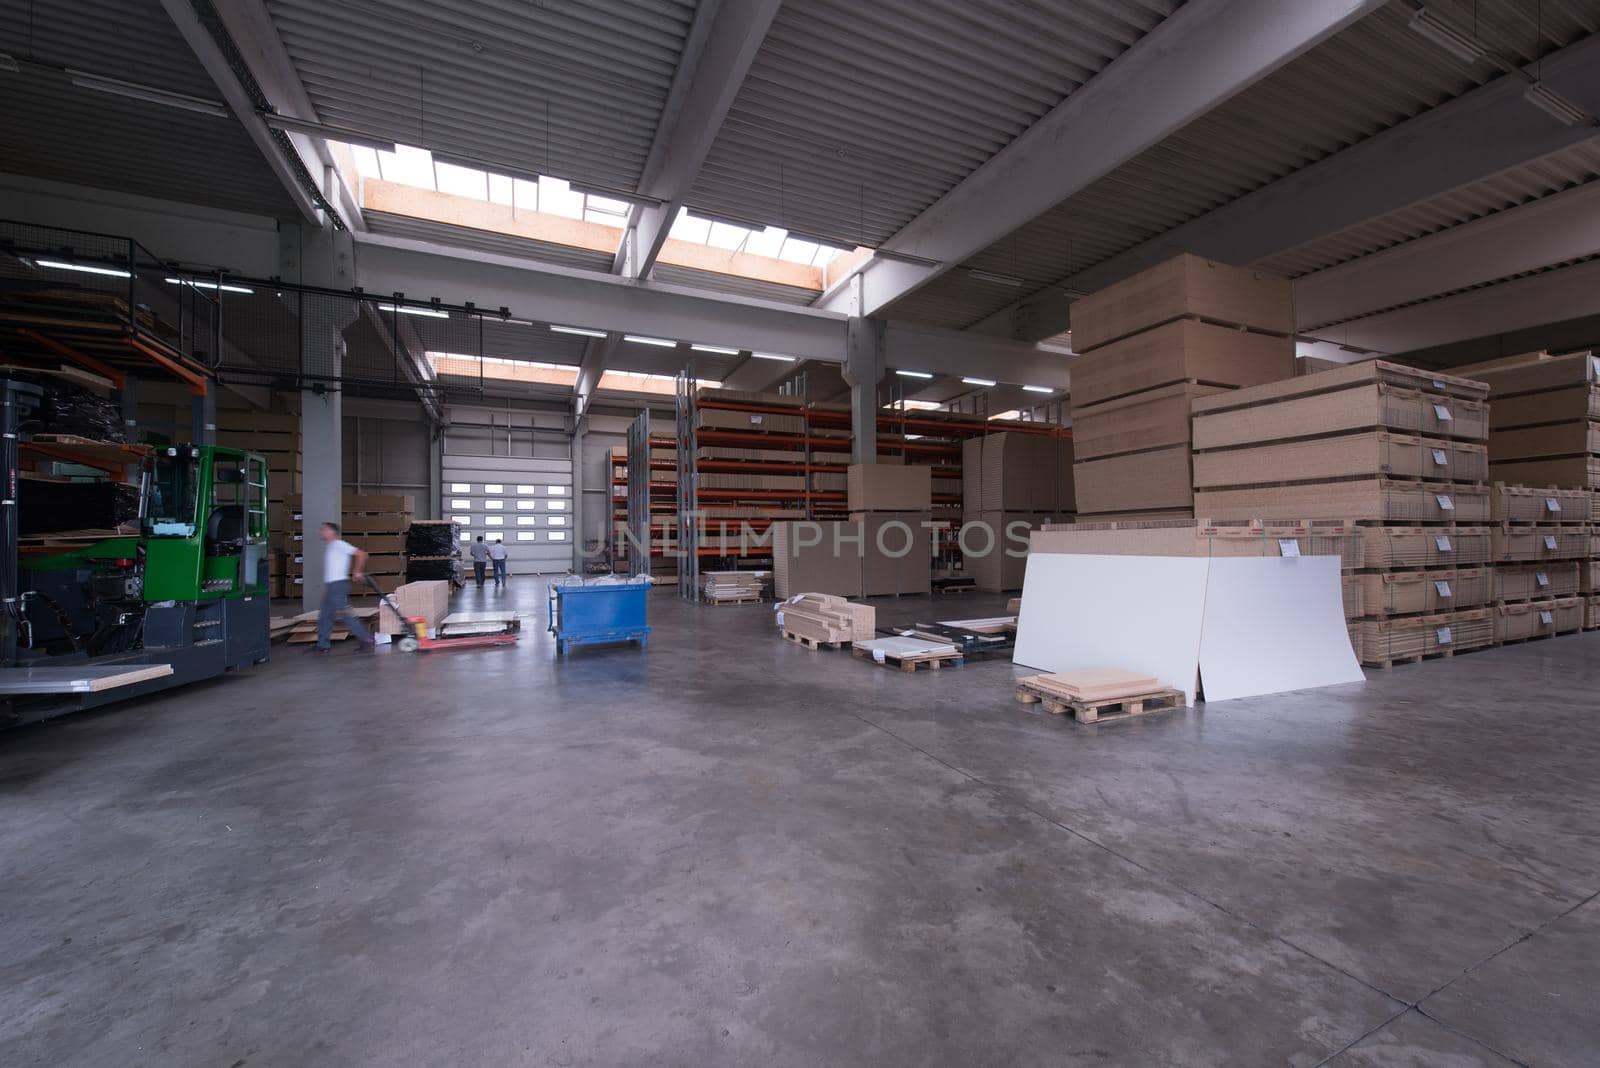 furniture factory by dotshock